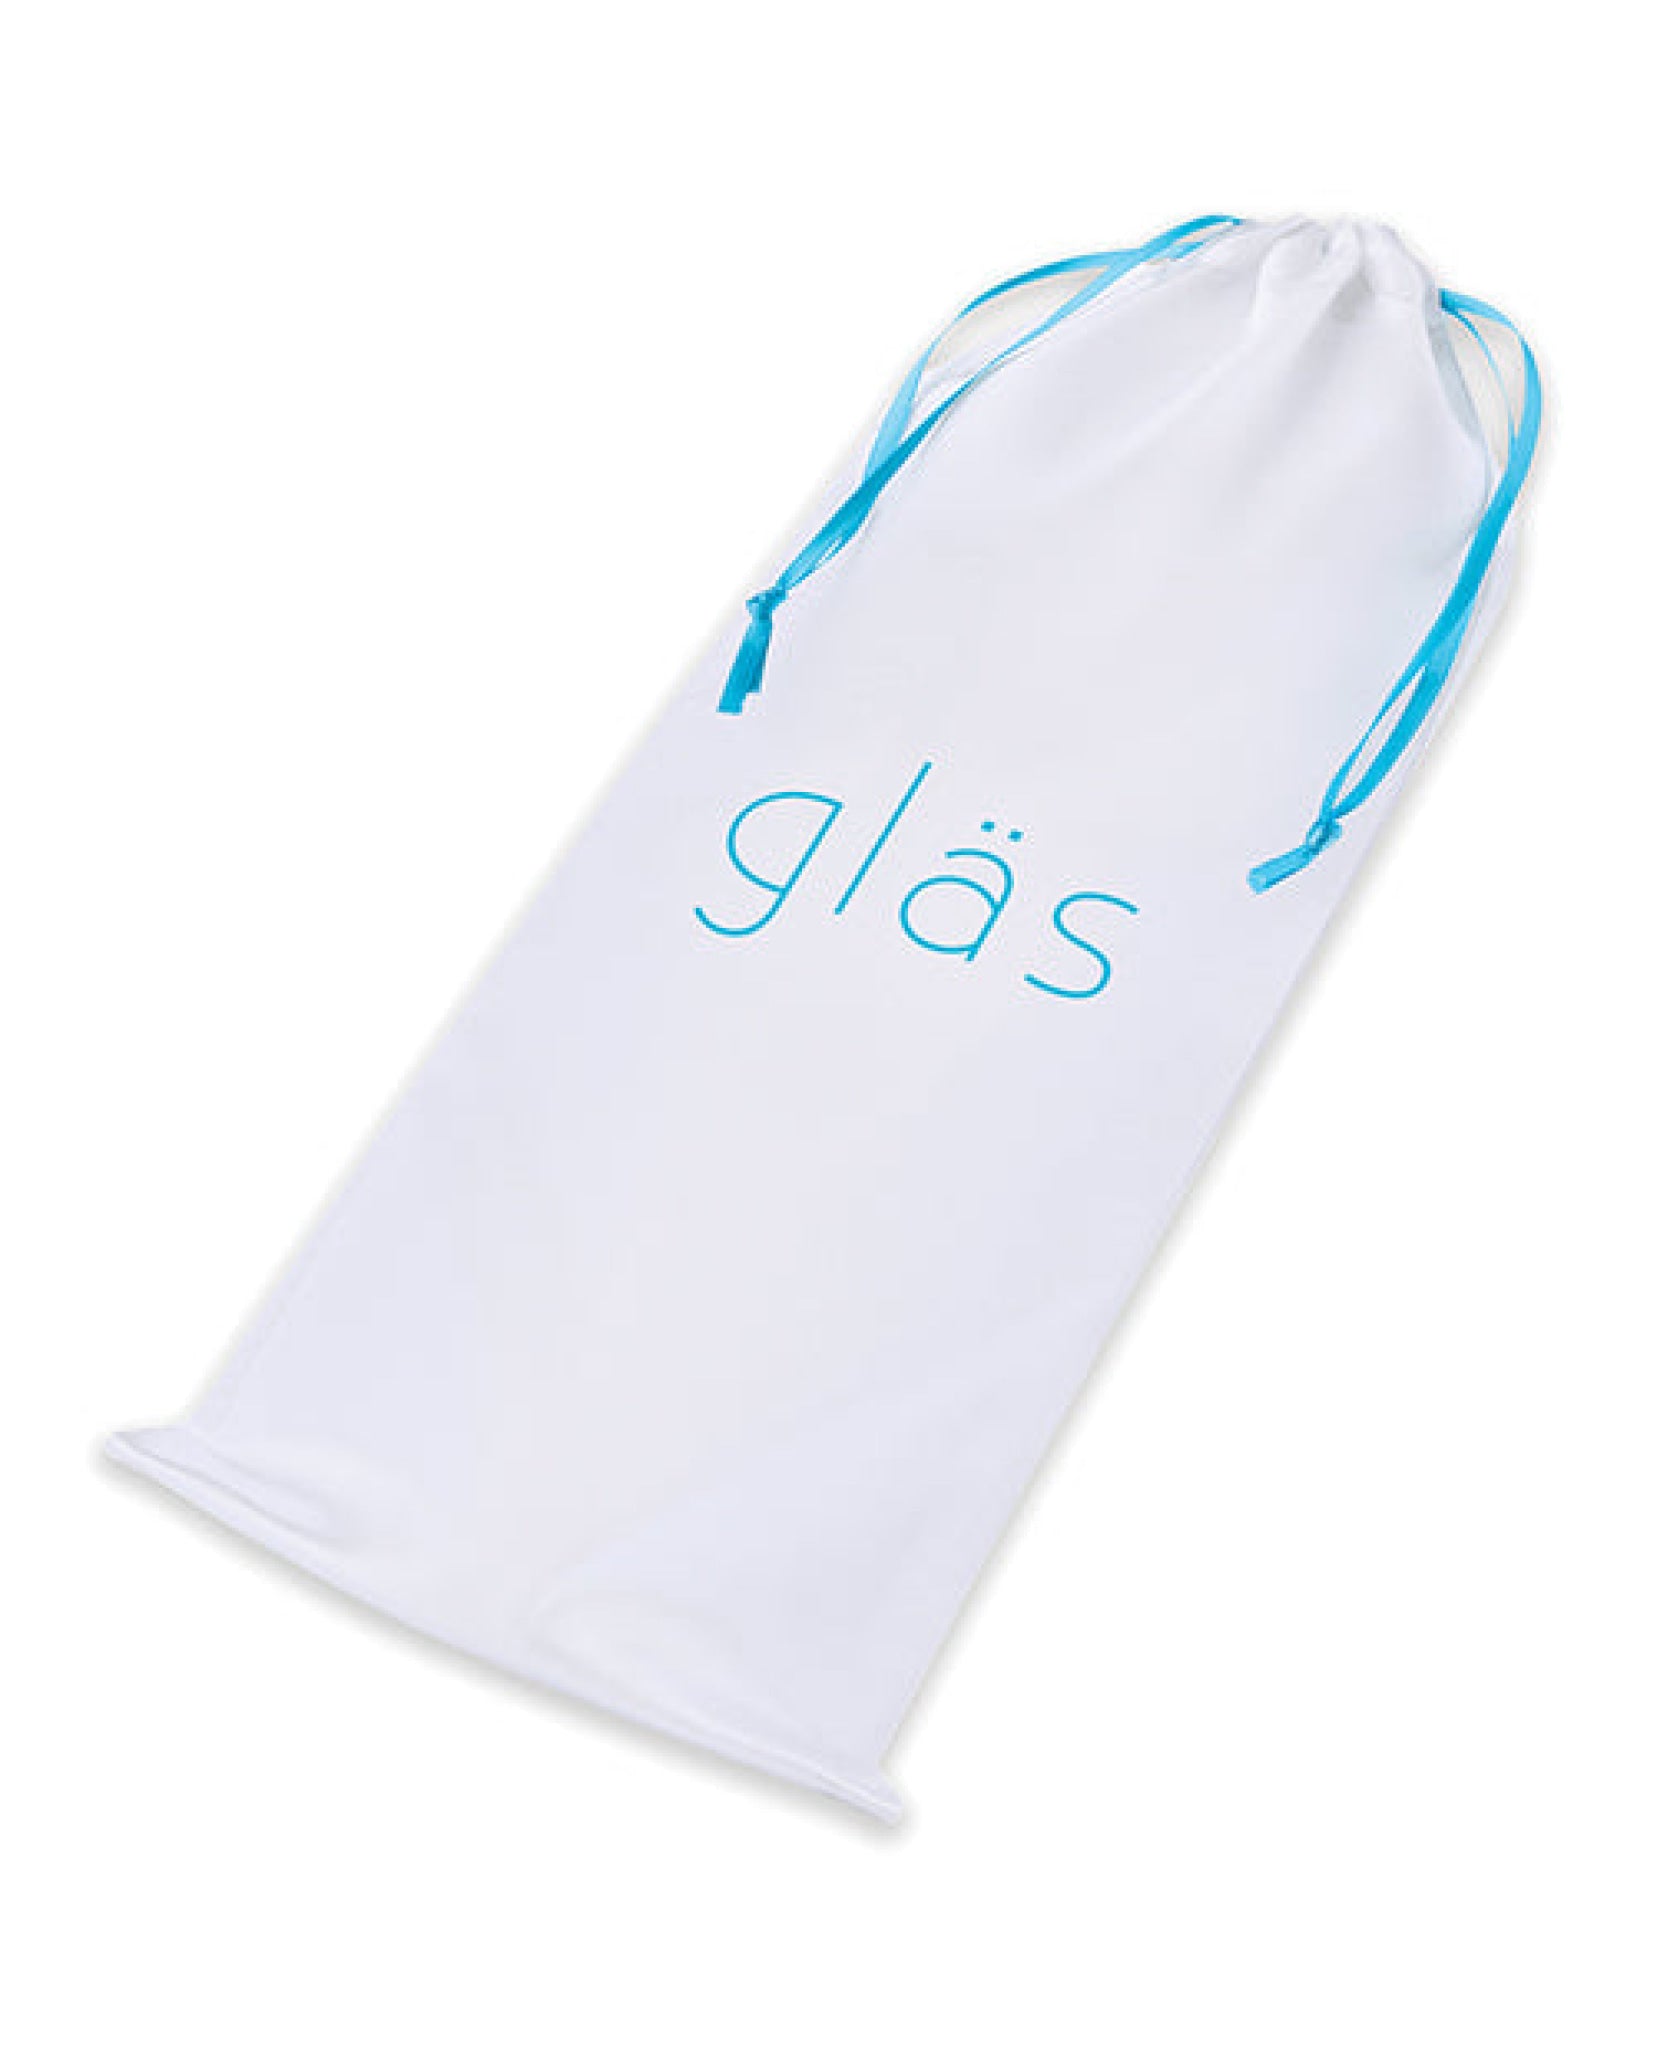 Glas 7.25" Glass Beaded Butt Plug - Clear Gläs